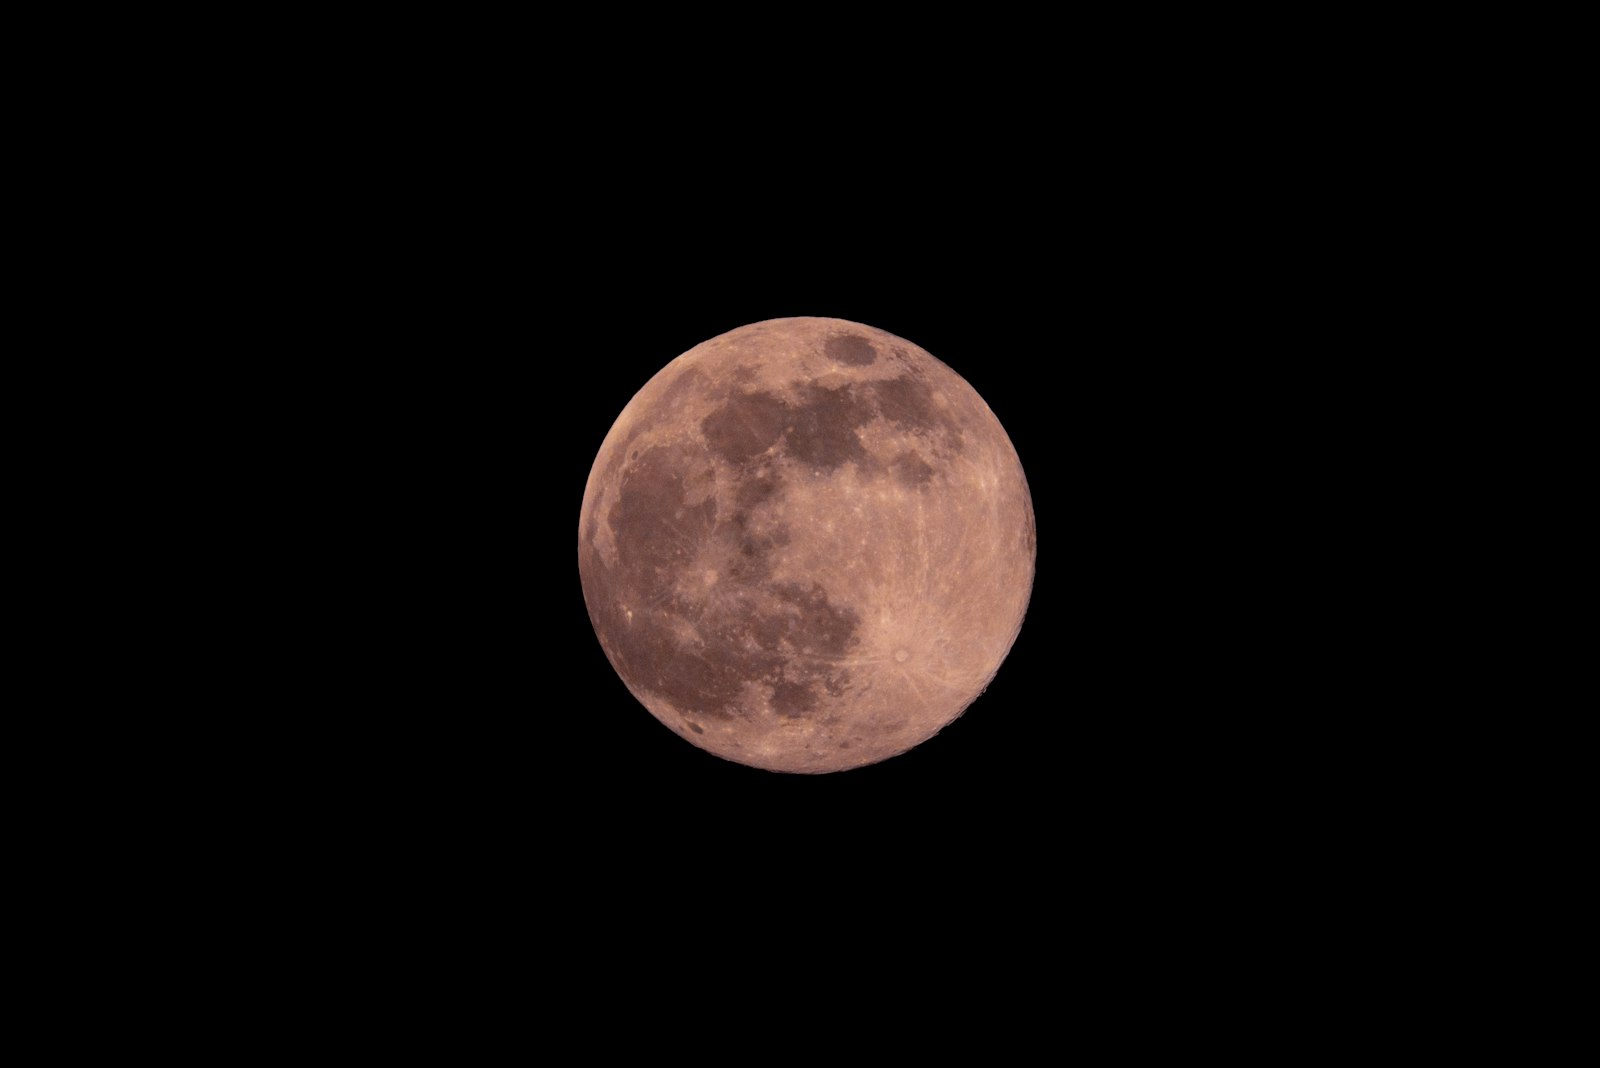 Nikon D750 + Sigma 150-600mm F5-6.3 DG OS HSM | C sample photo. Full moon in dark photography